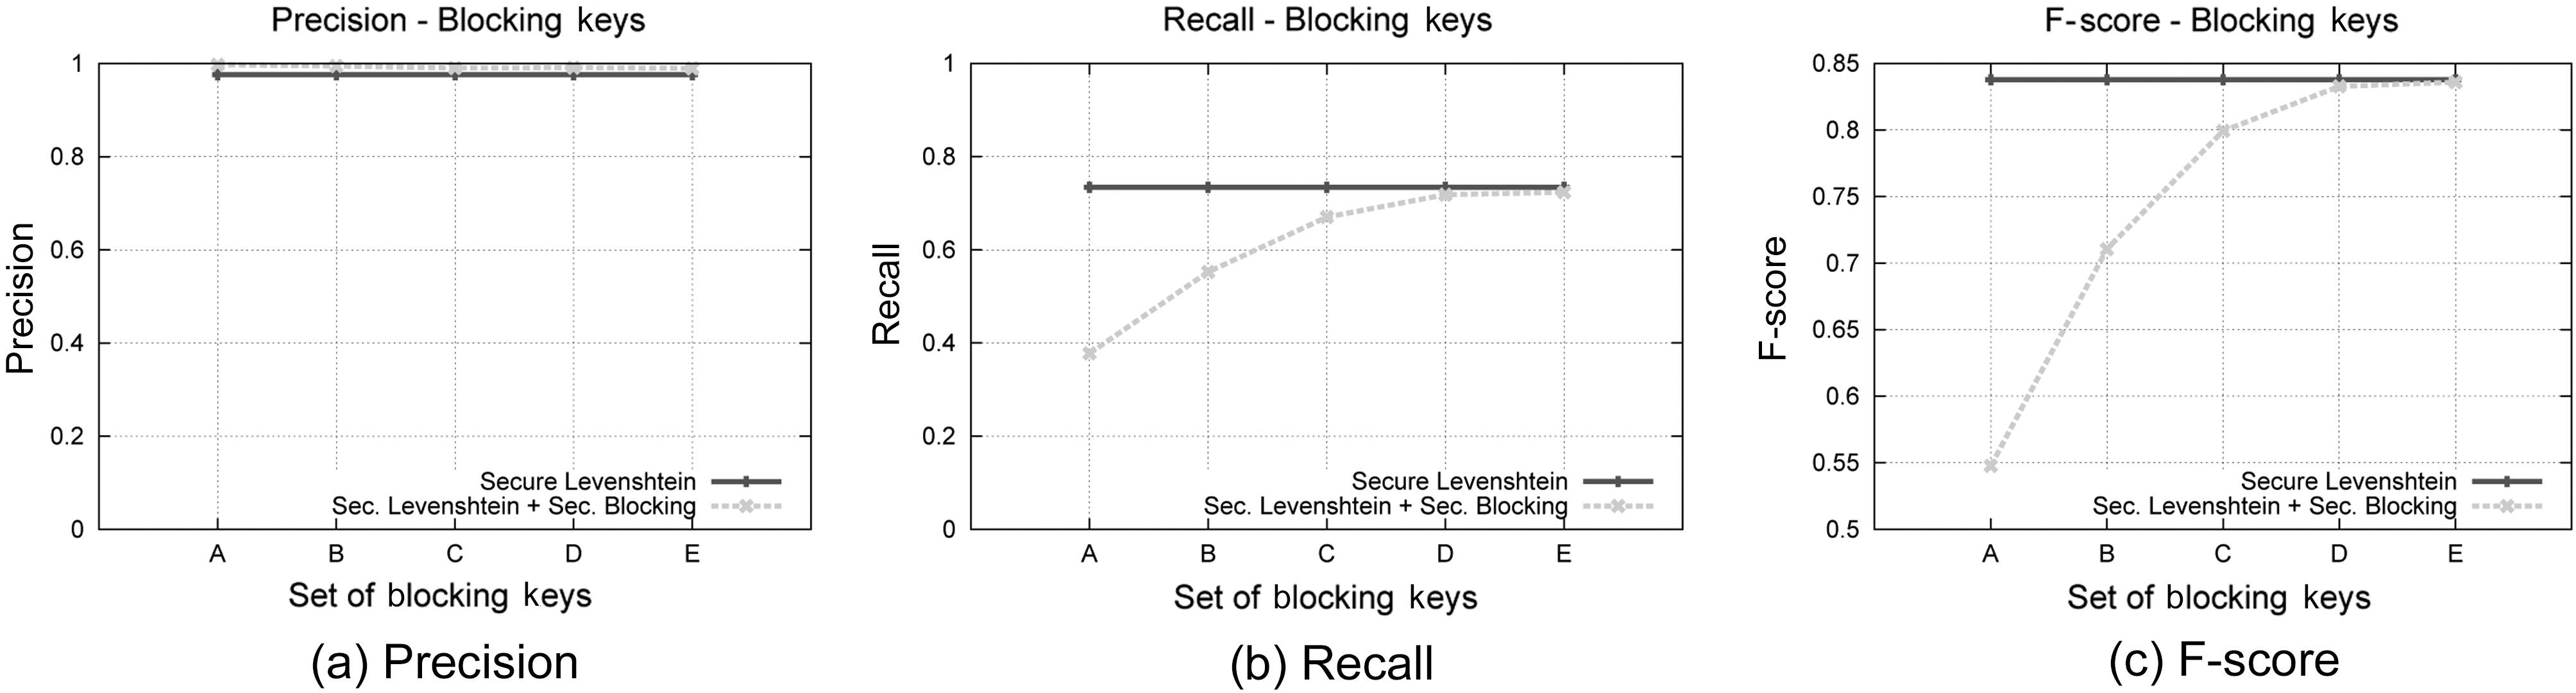 Precision recall F-score vs. blocking keys.